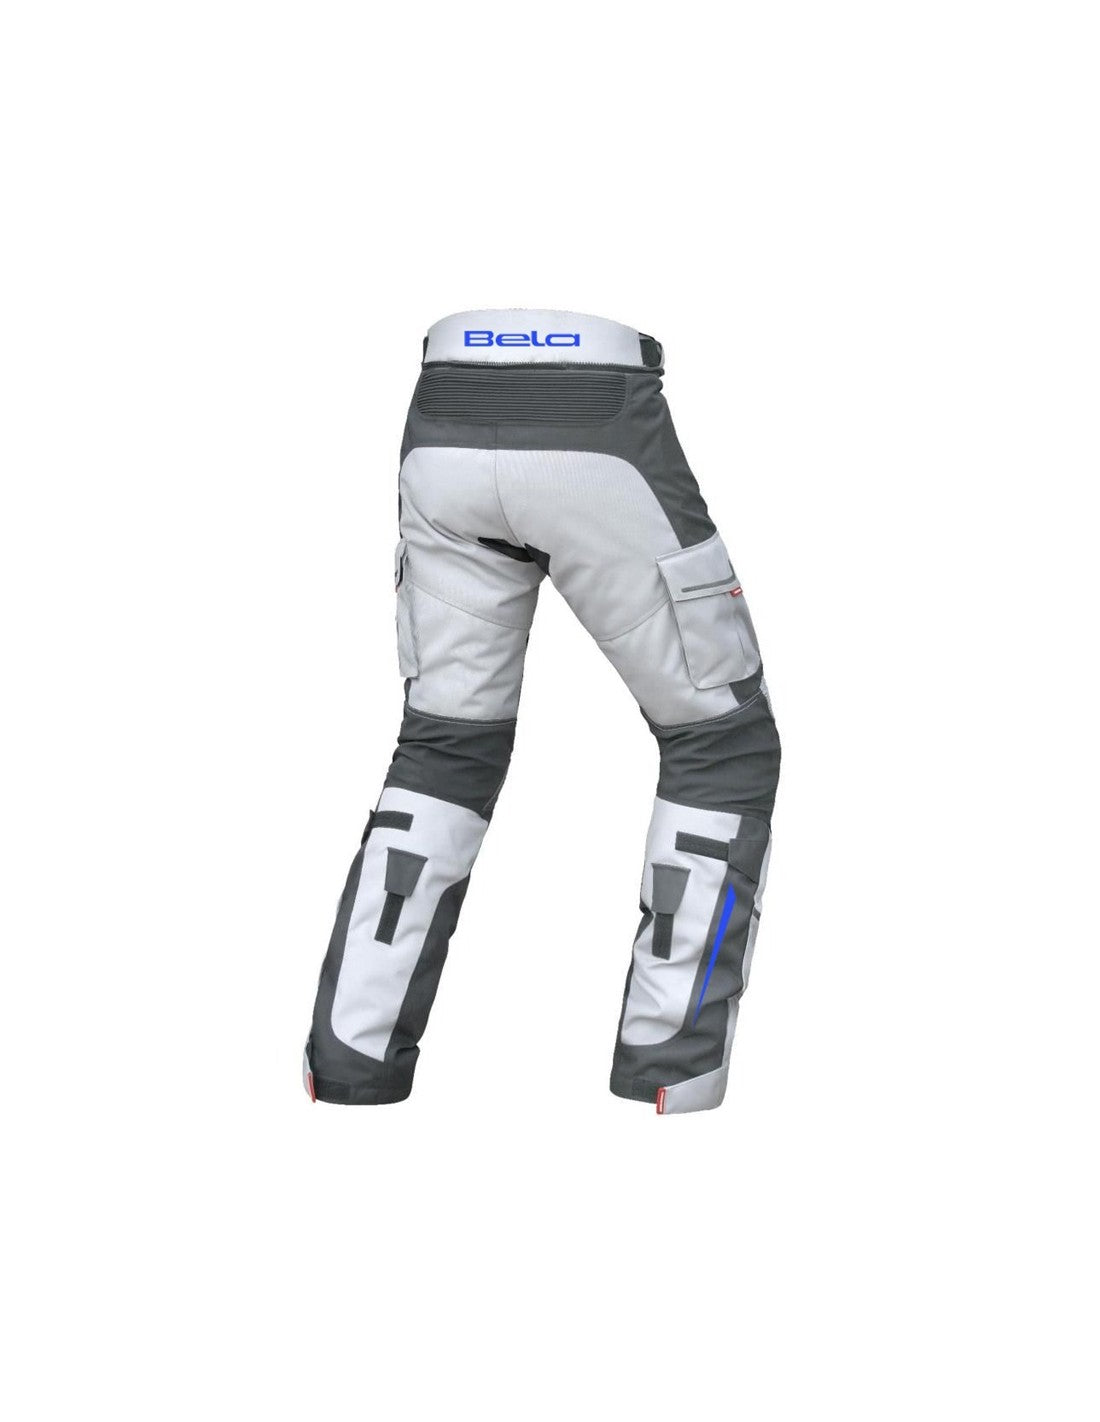 Bela Transformer Pantaloni da moto per uomo - Grigio / Nero / Blu